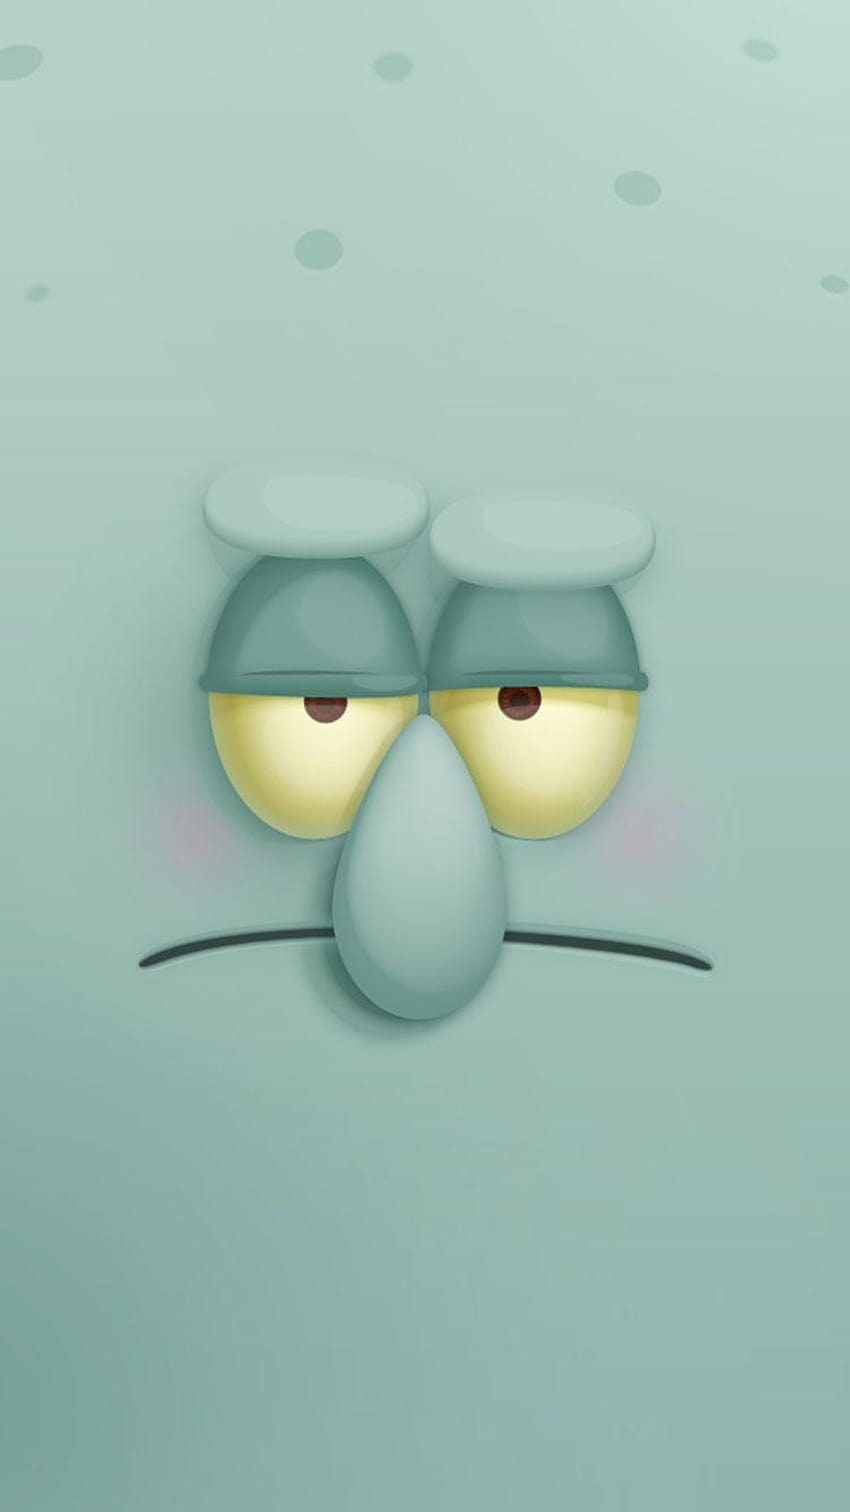 3840x2160px, 4K Free download | Squidwards Go Away Spongebob Cartoon ...